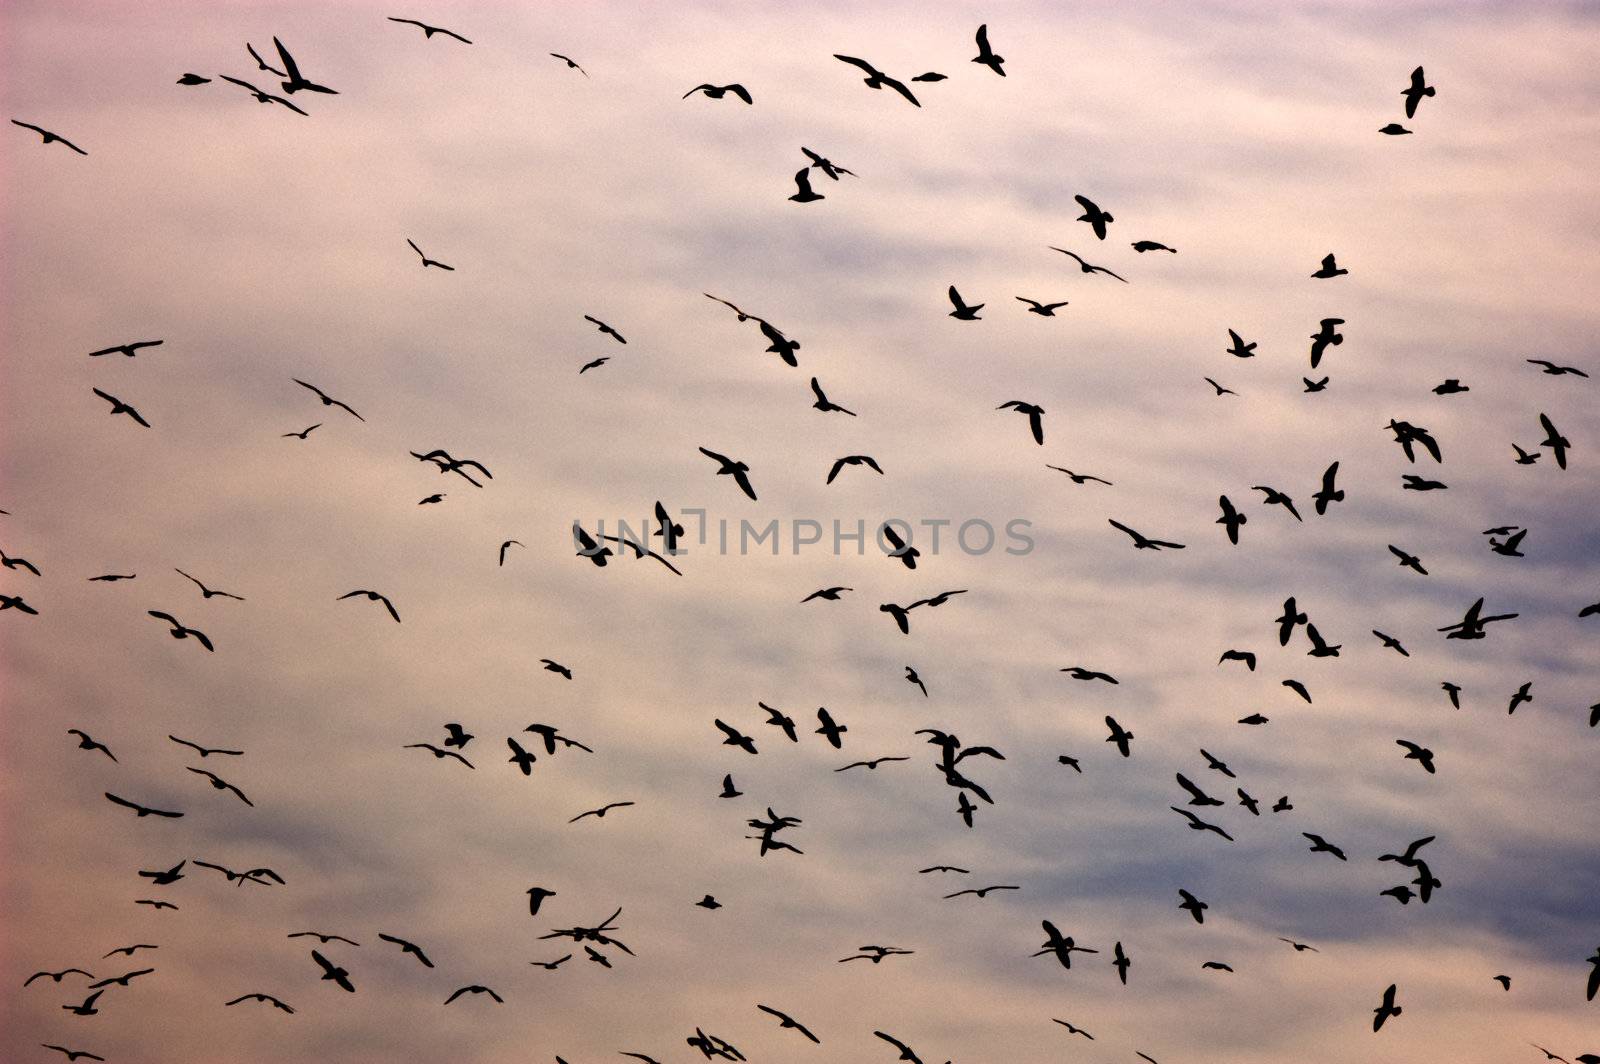 Birds silhouette against a dramatic sky